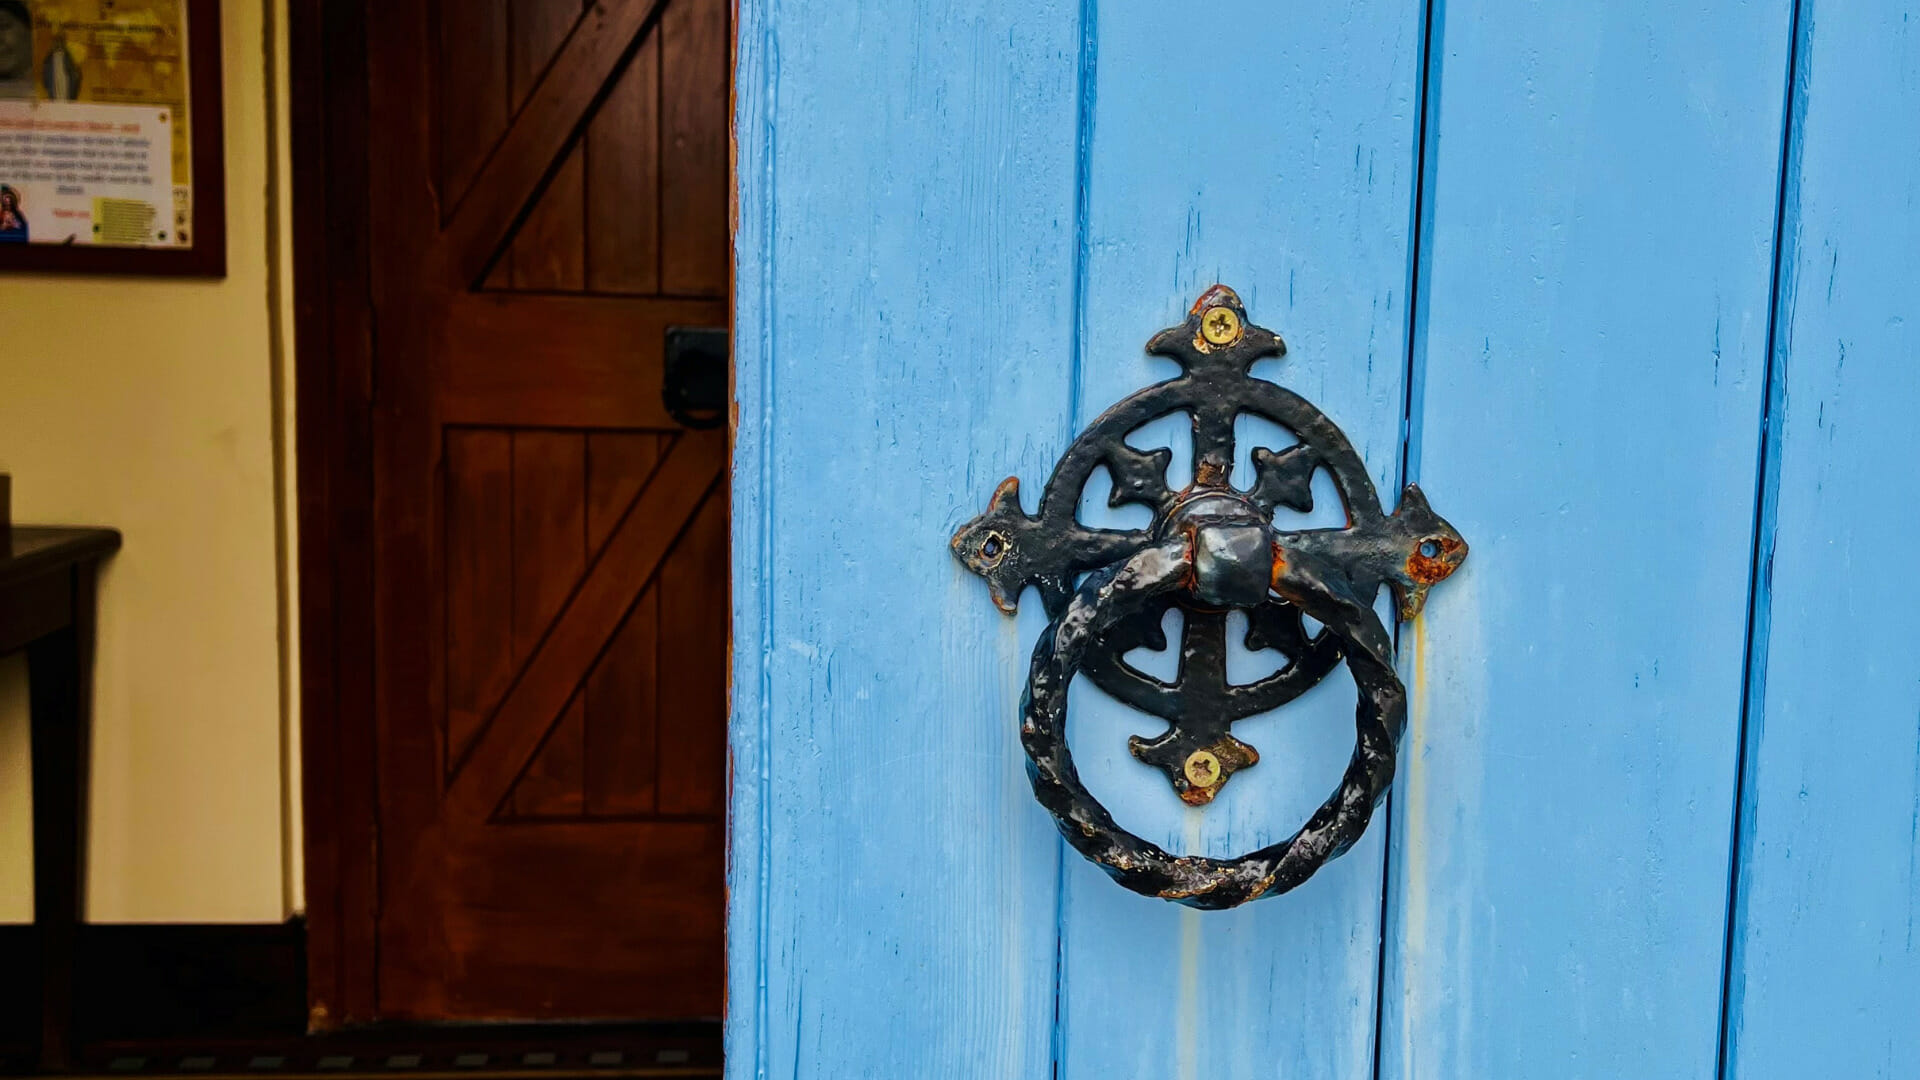 Blue church door with black circle drop handle